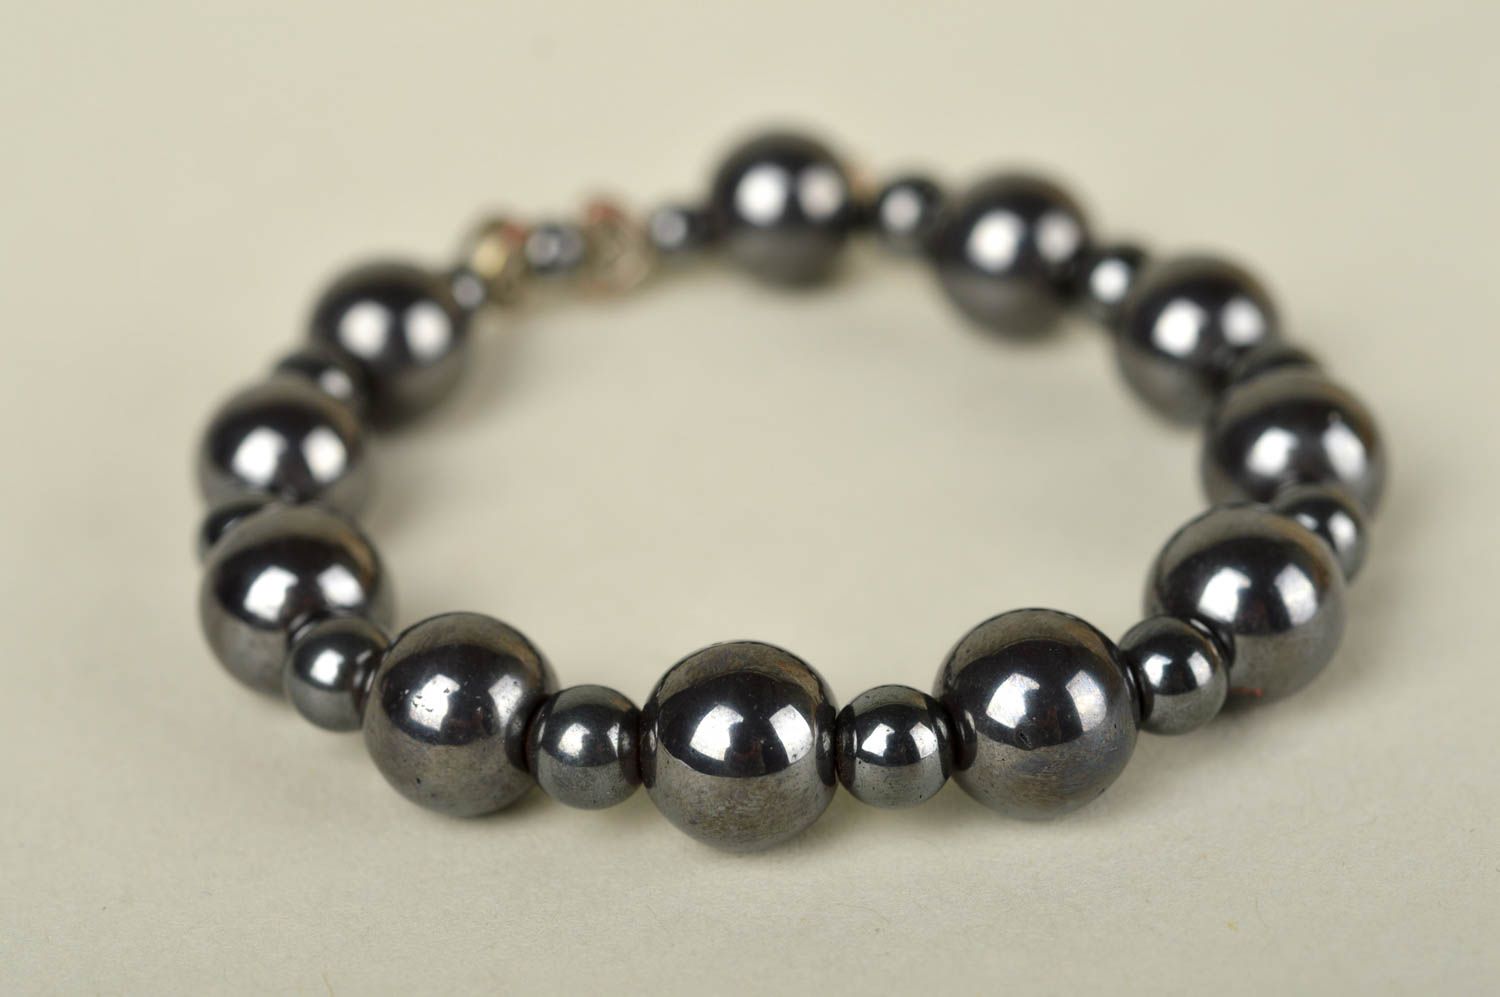 Hematite beads wrist adjustable bracelet for women photo 5